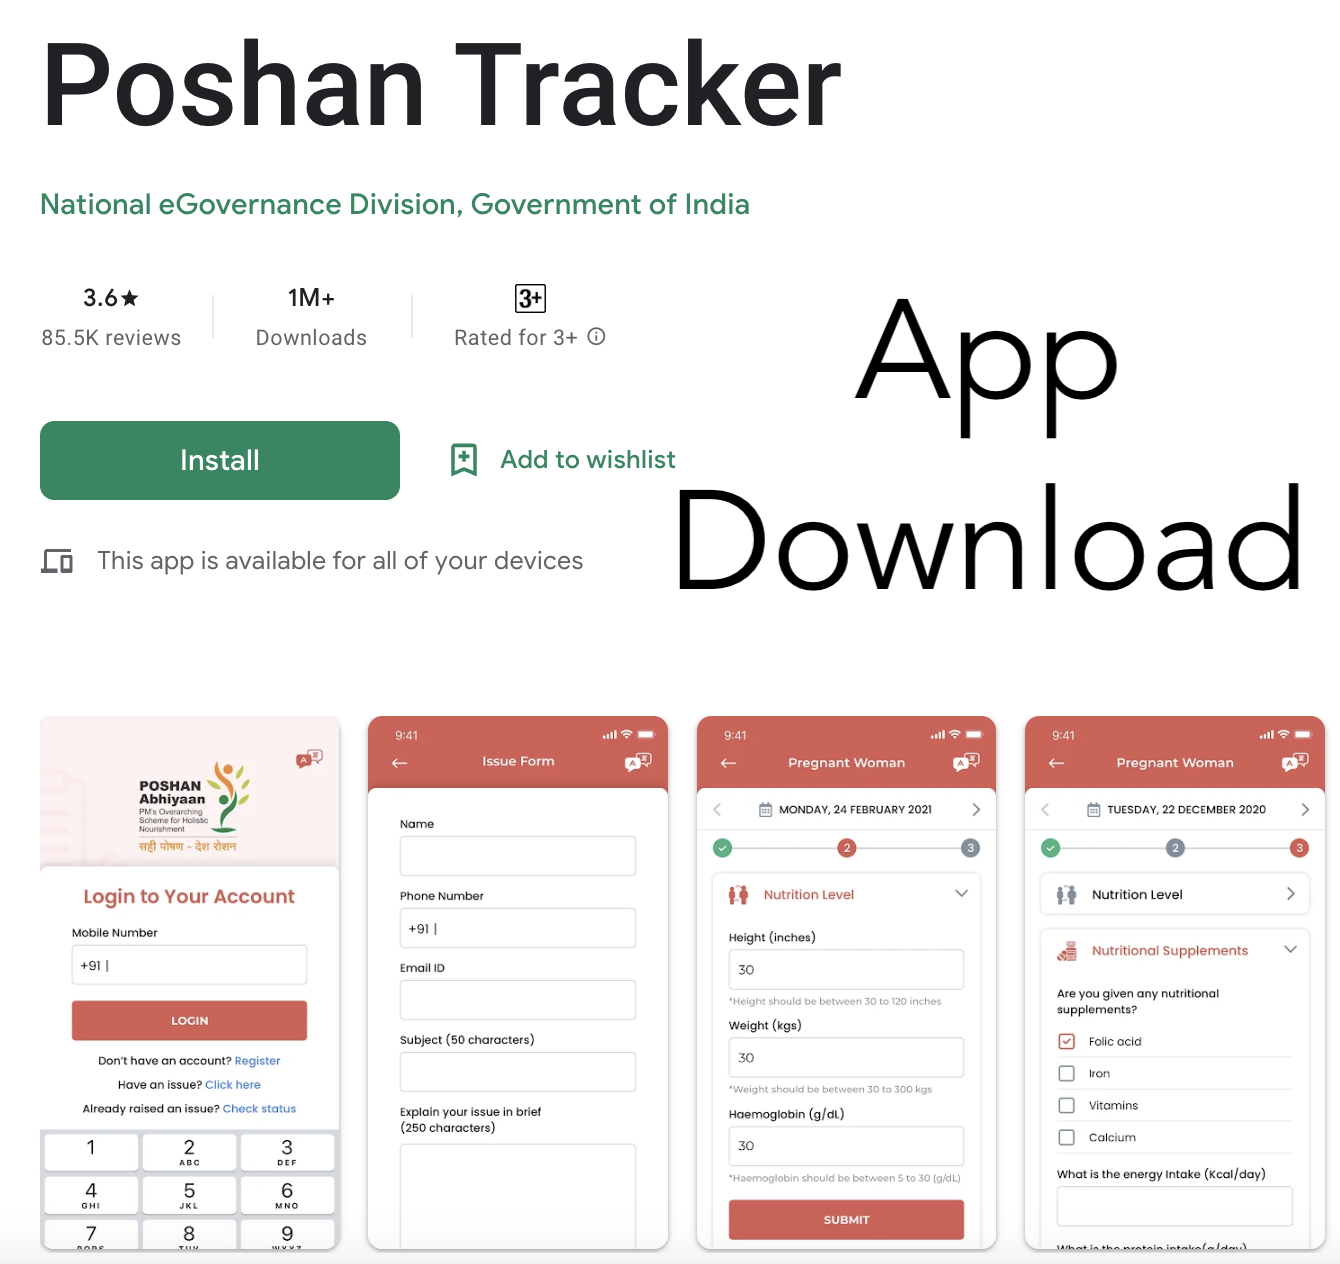 Poshan Tracker